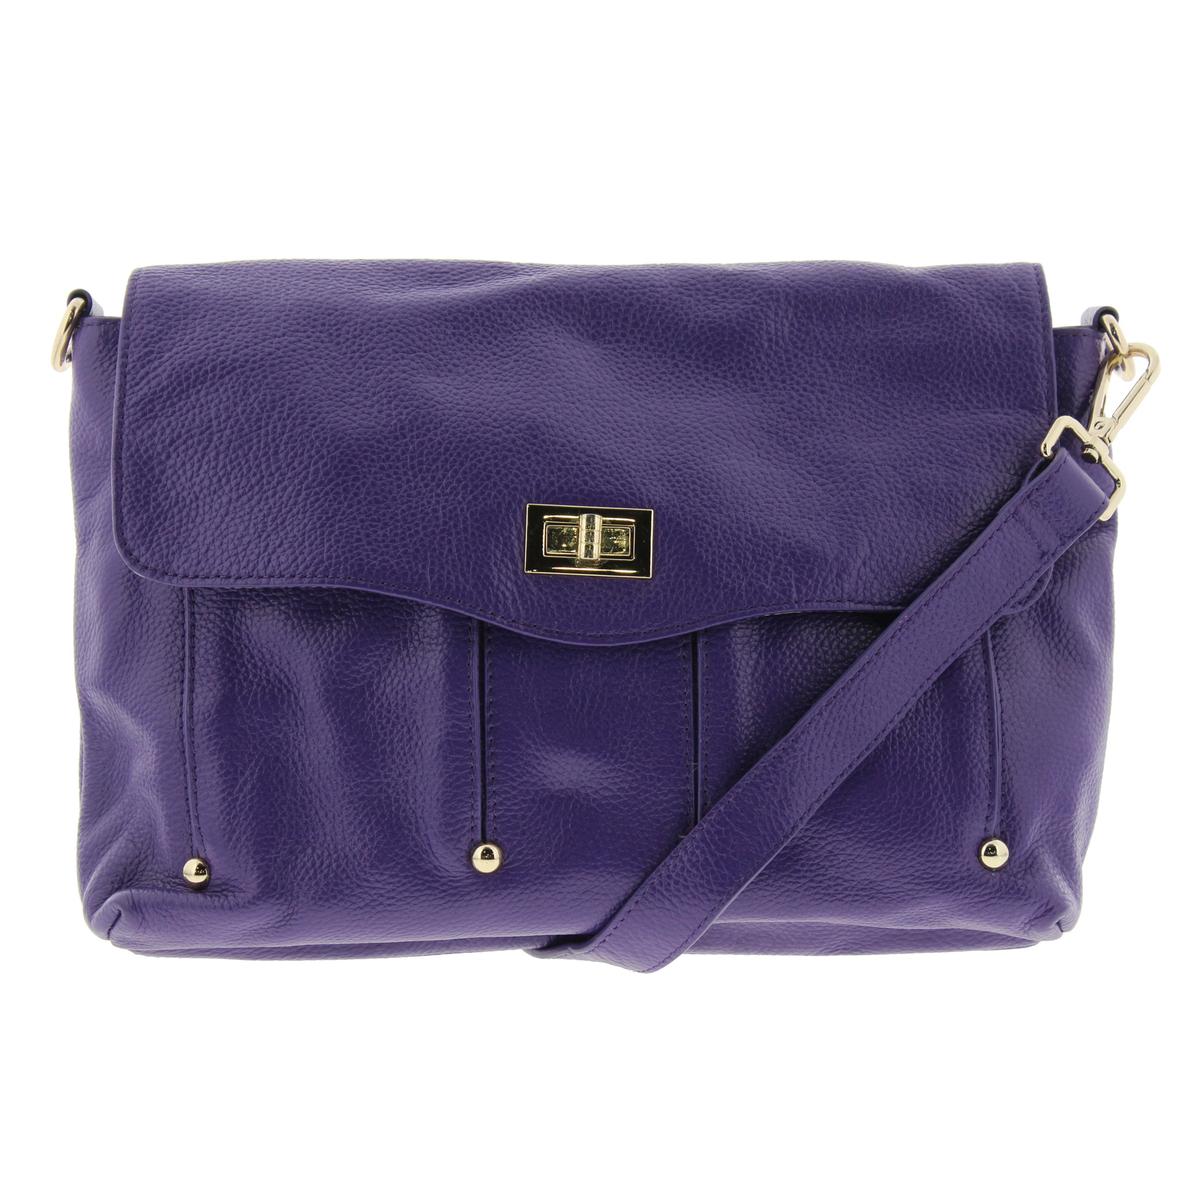 Ruby Kats 5015 Womens Purple Leather Flap Shoulder Handbag Purse Medium ...